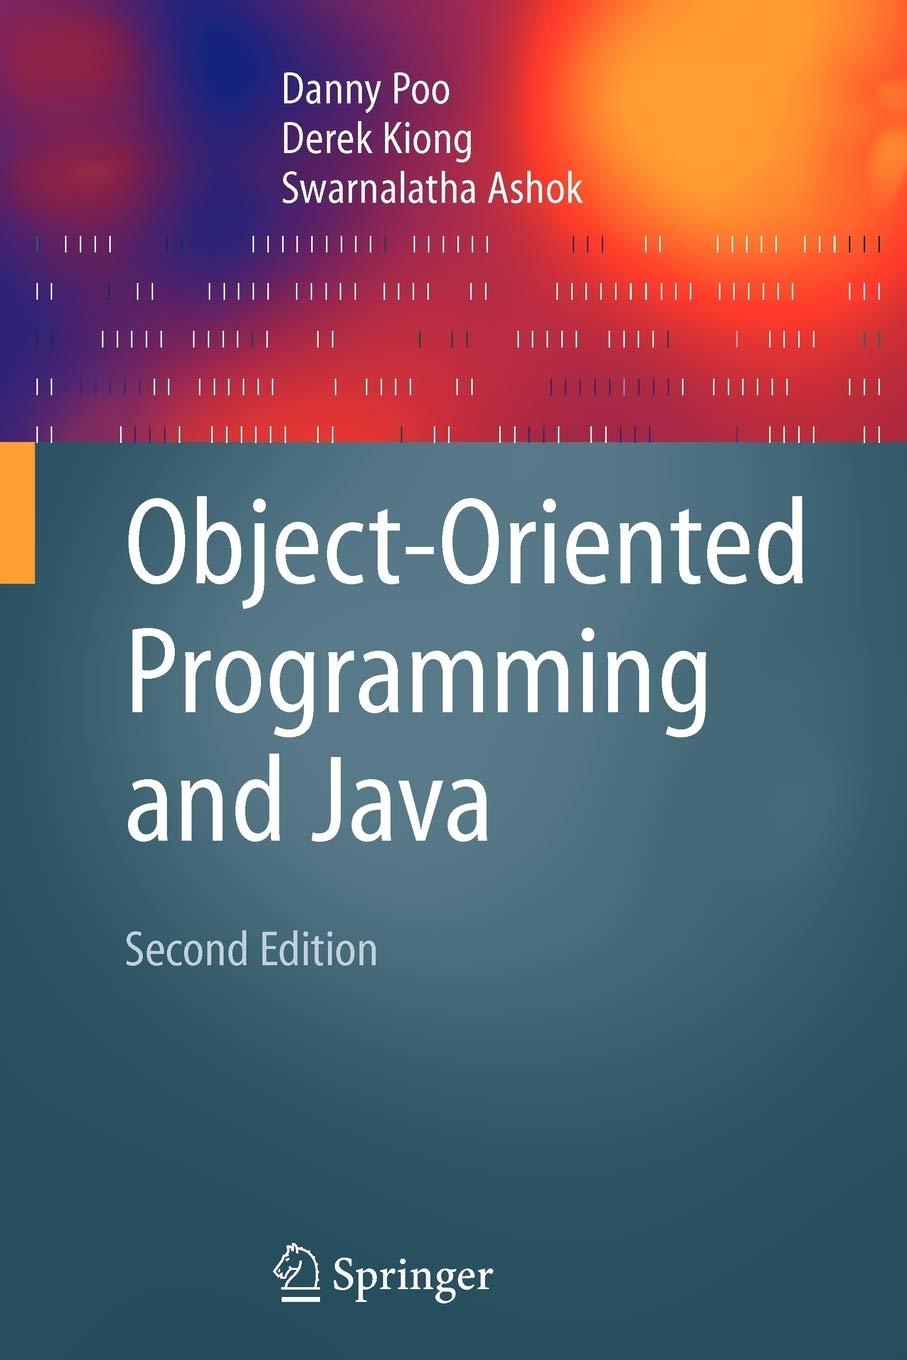 object oriented programming and java 2nd edition danny poo, derek kiong, swarnalatha ashok 1846289629,